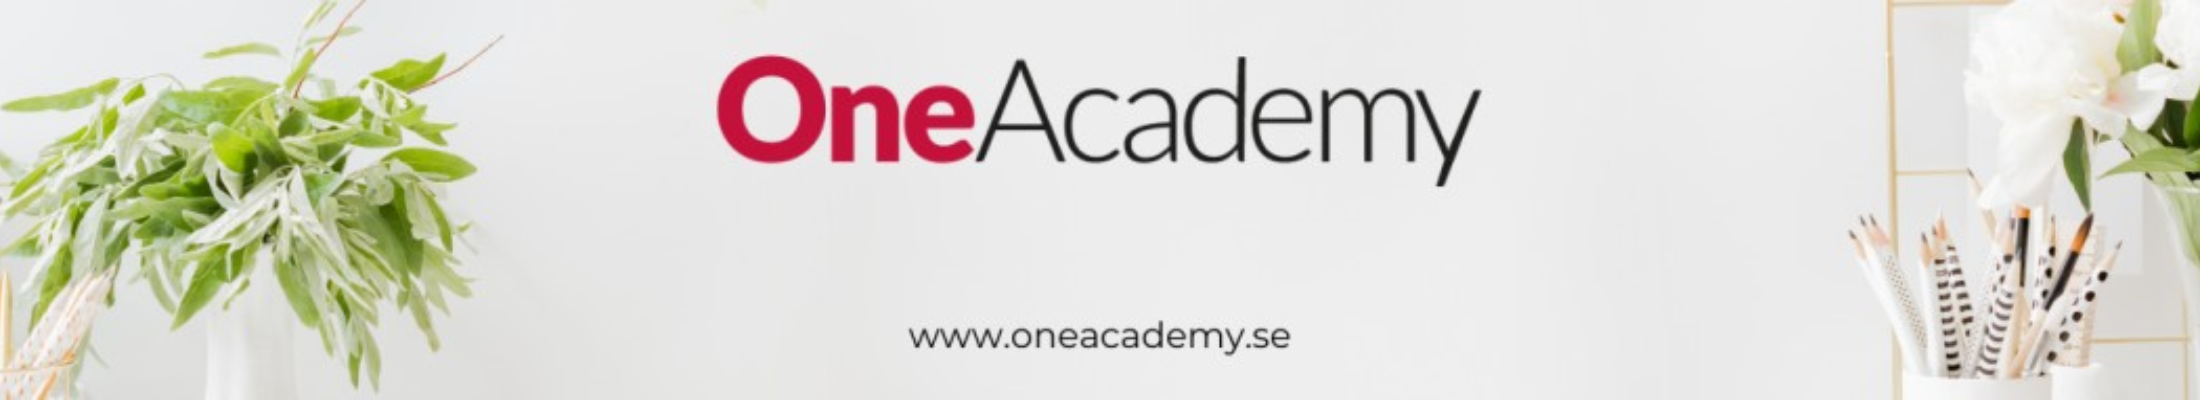 One Academy